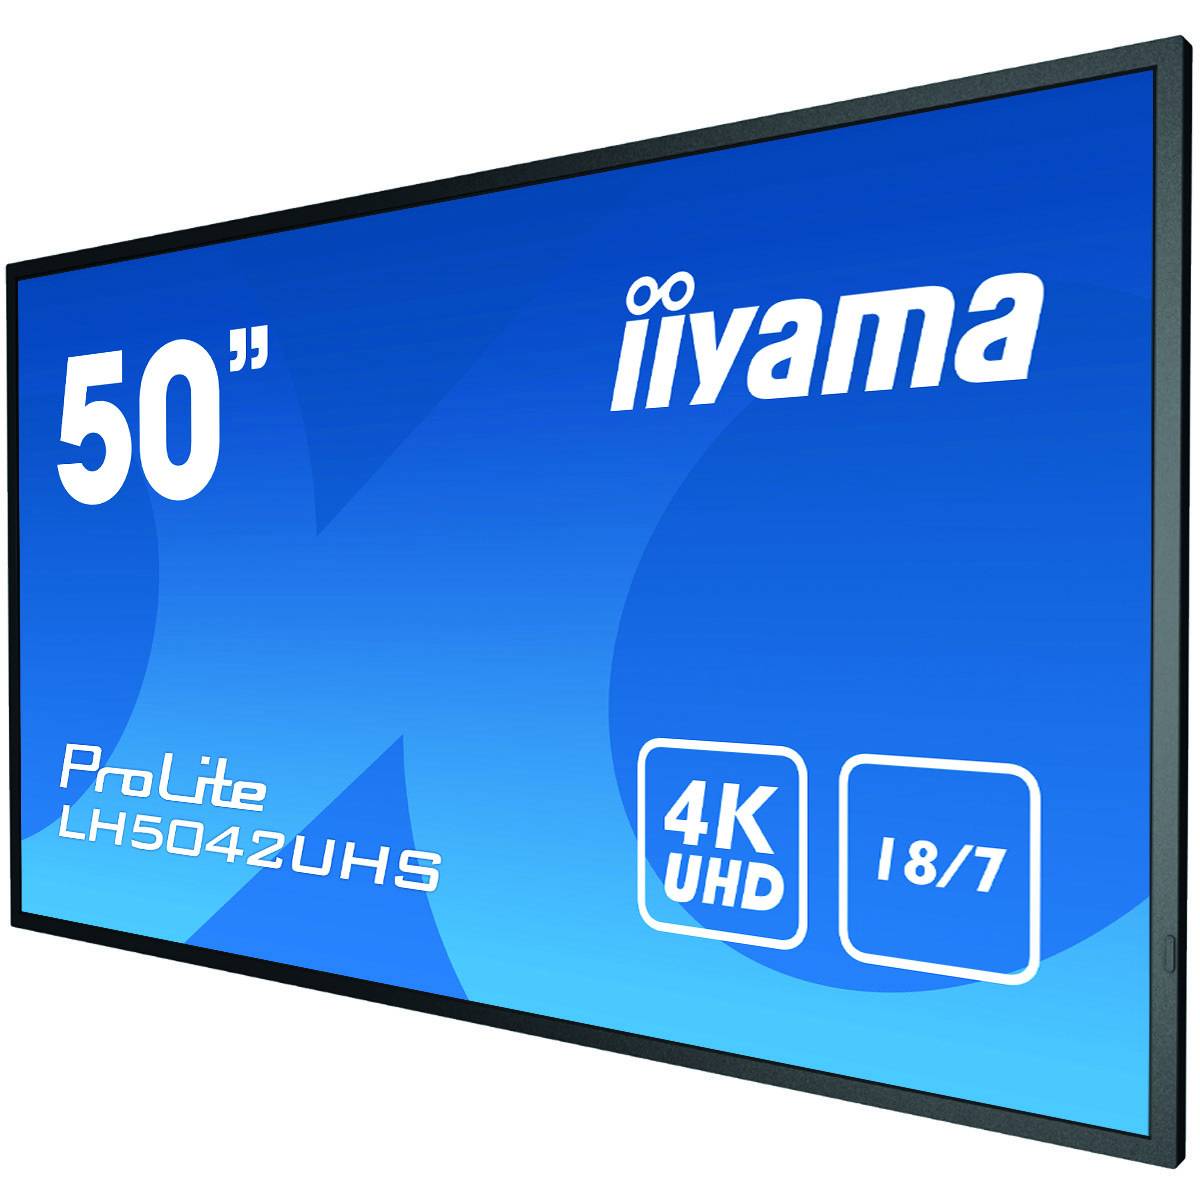 Rca Informatique - image du produit : 50 IN 3840X2160 4K UHD IPS PANEL (DISPLAYPORT DVI HDMI) 500